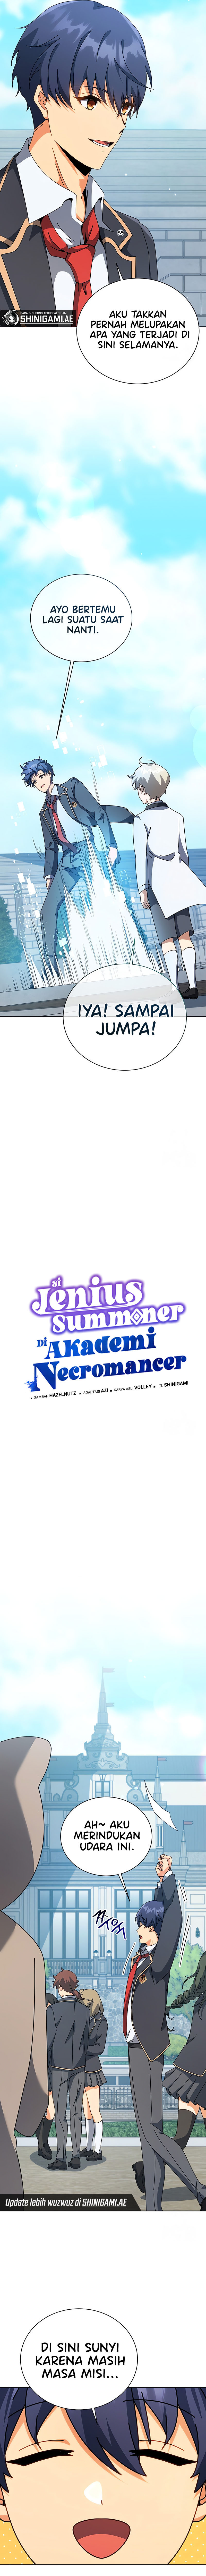 Necromancer Academy’s Genius Summoner Chapter 99 Image 4